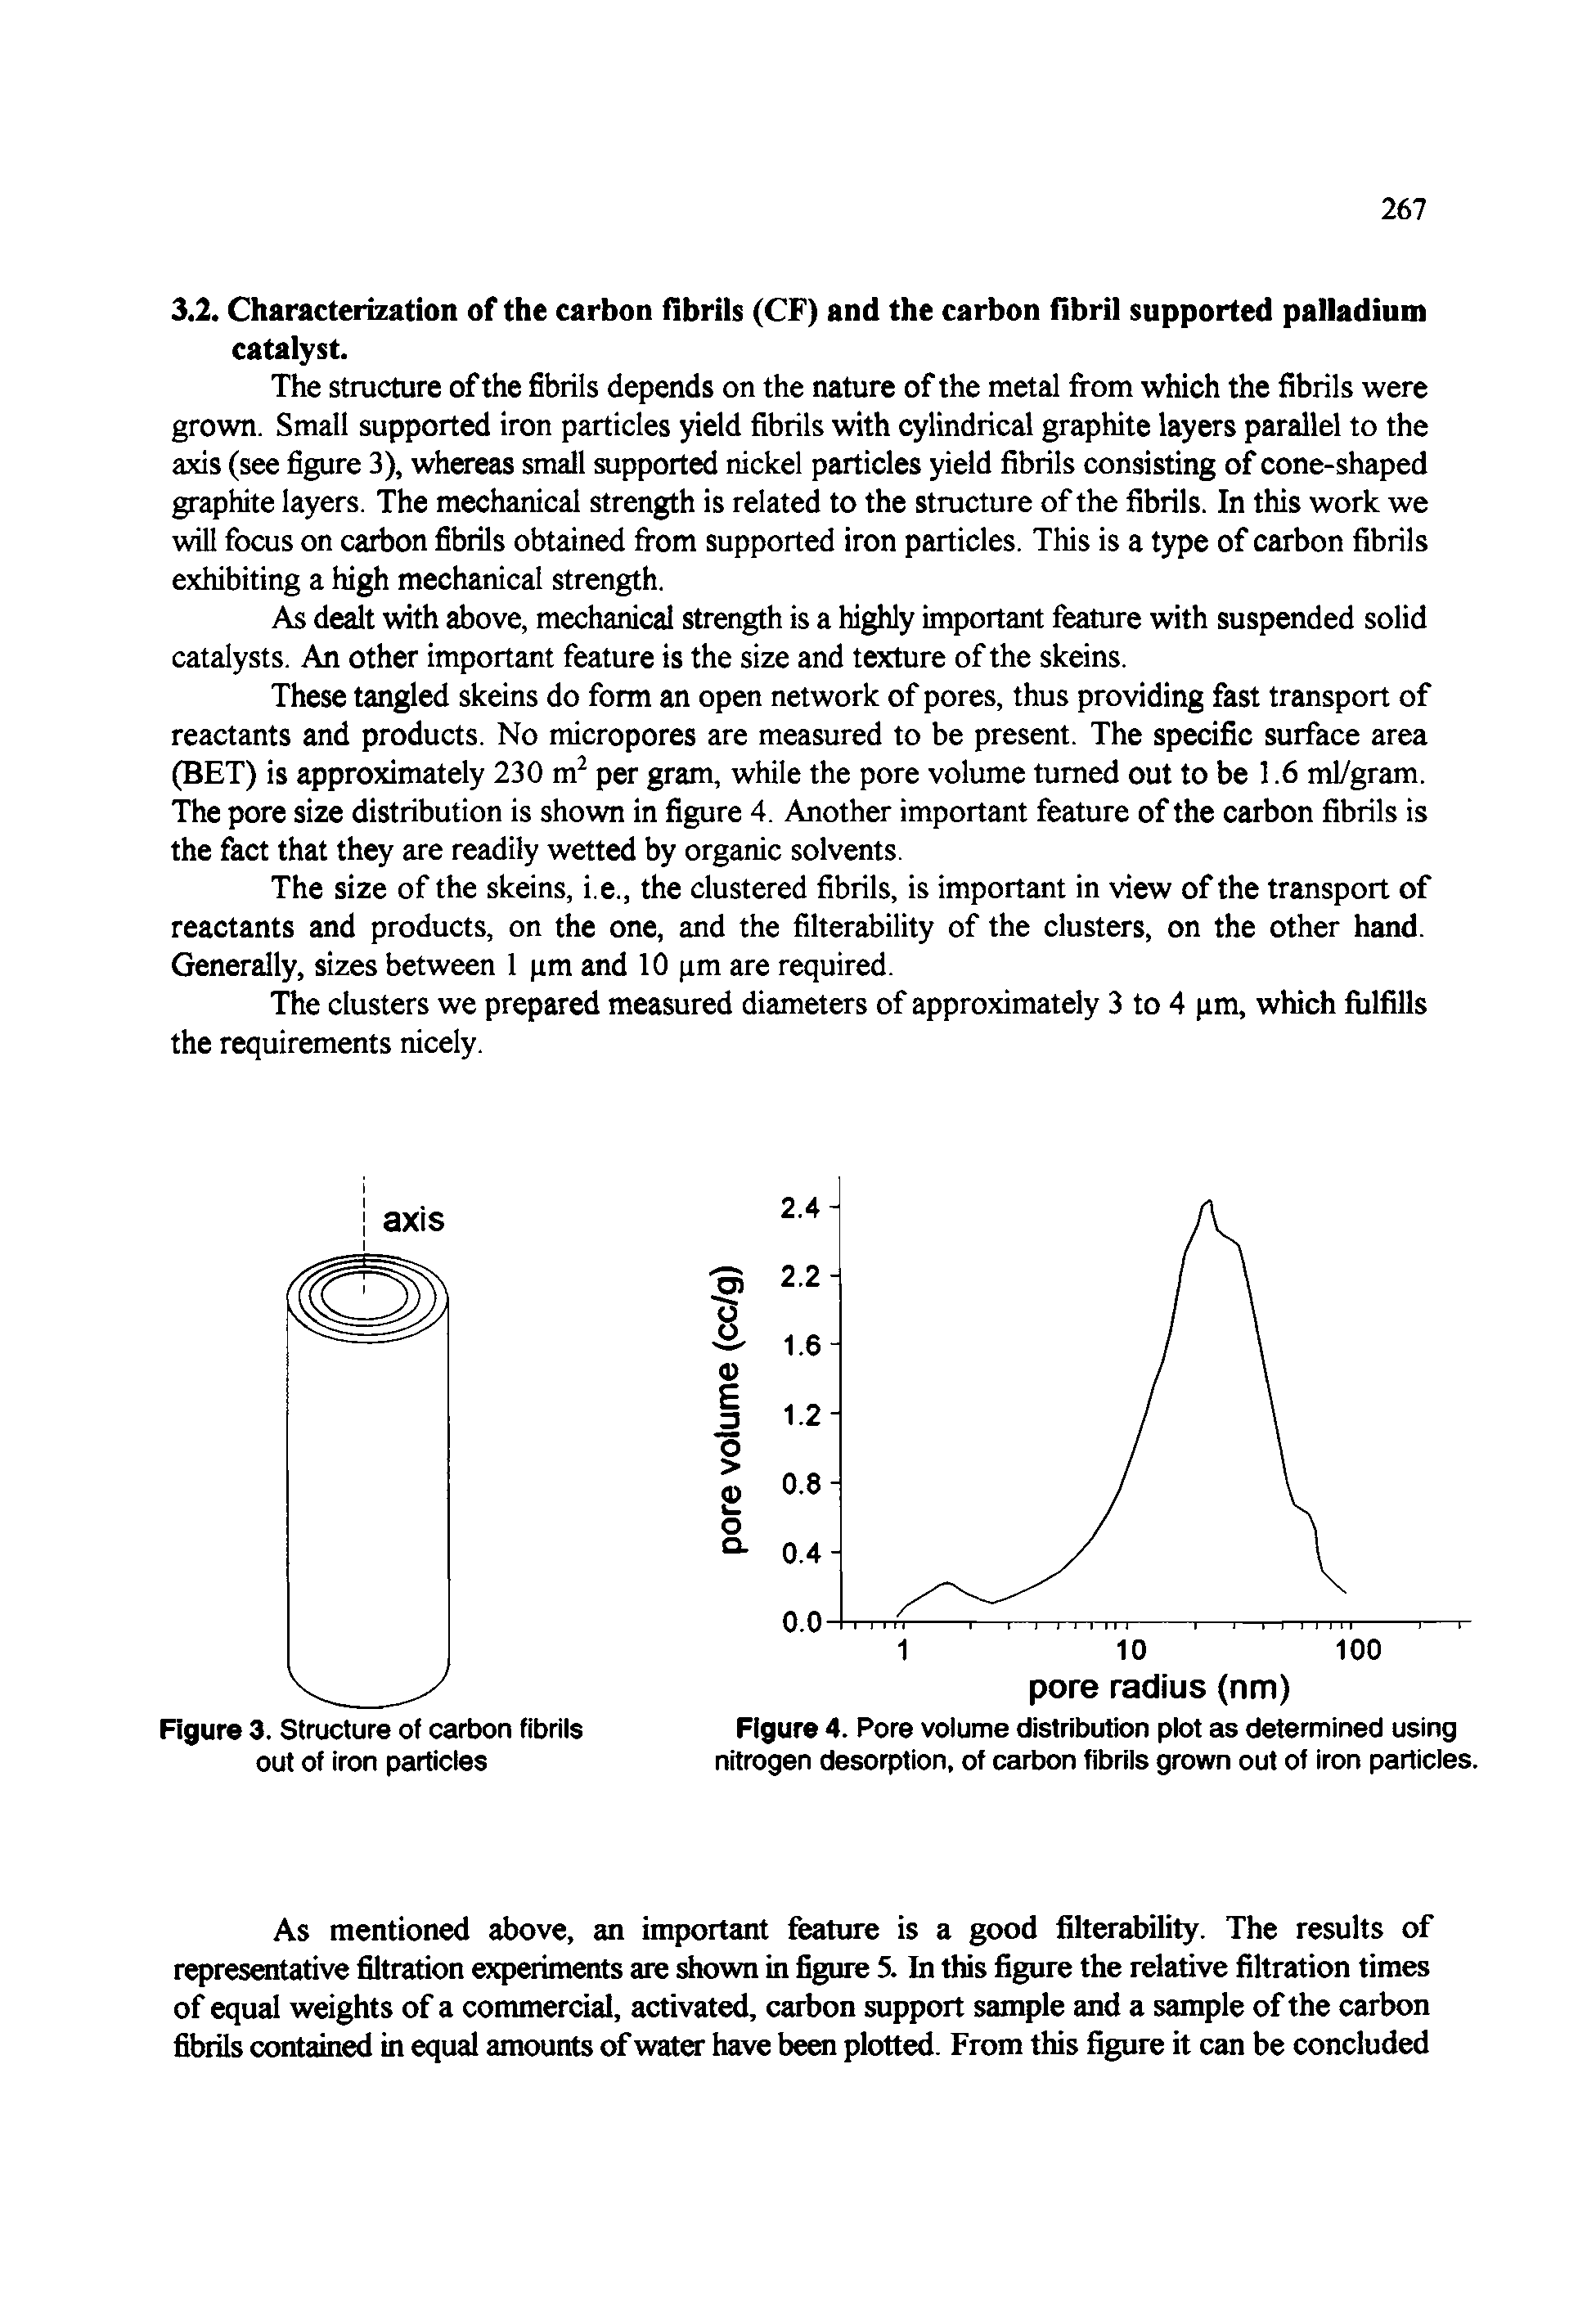 Figure 4. Pore volume distribution plot as determined using nitrogen desorption, of carbon fibrils grown out of iron particles.